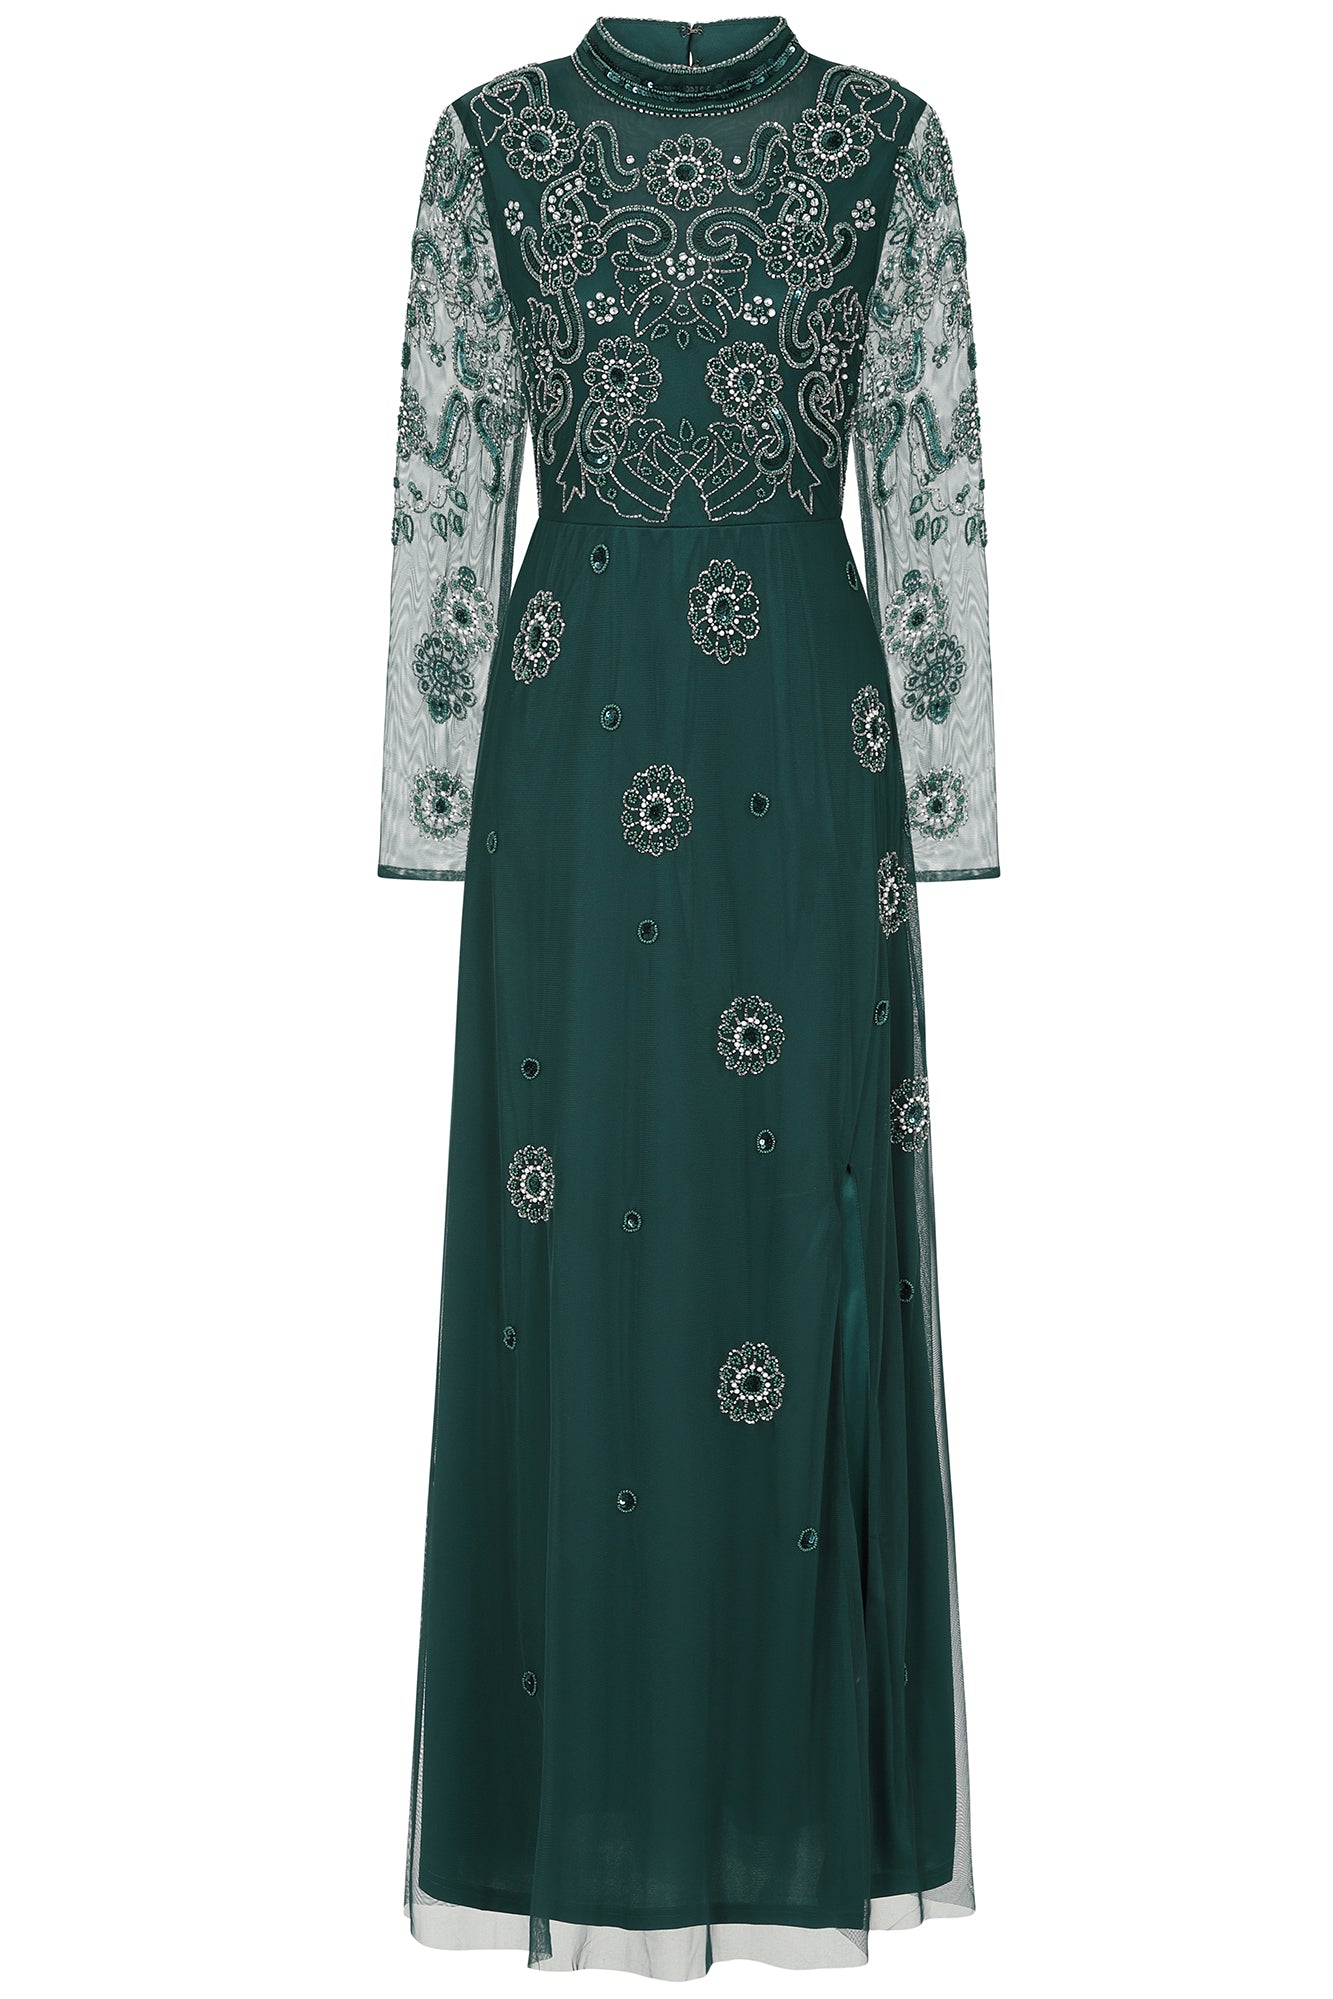 Sabina Green Embellished Maxi Dress 2